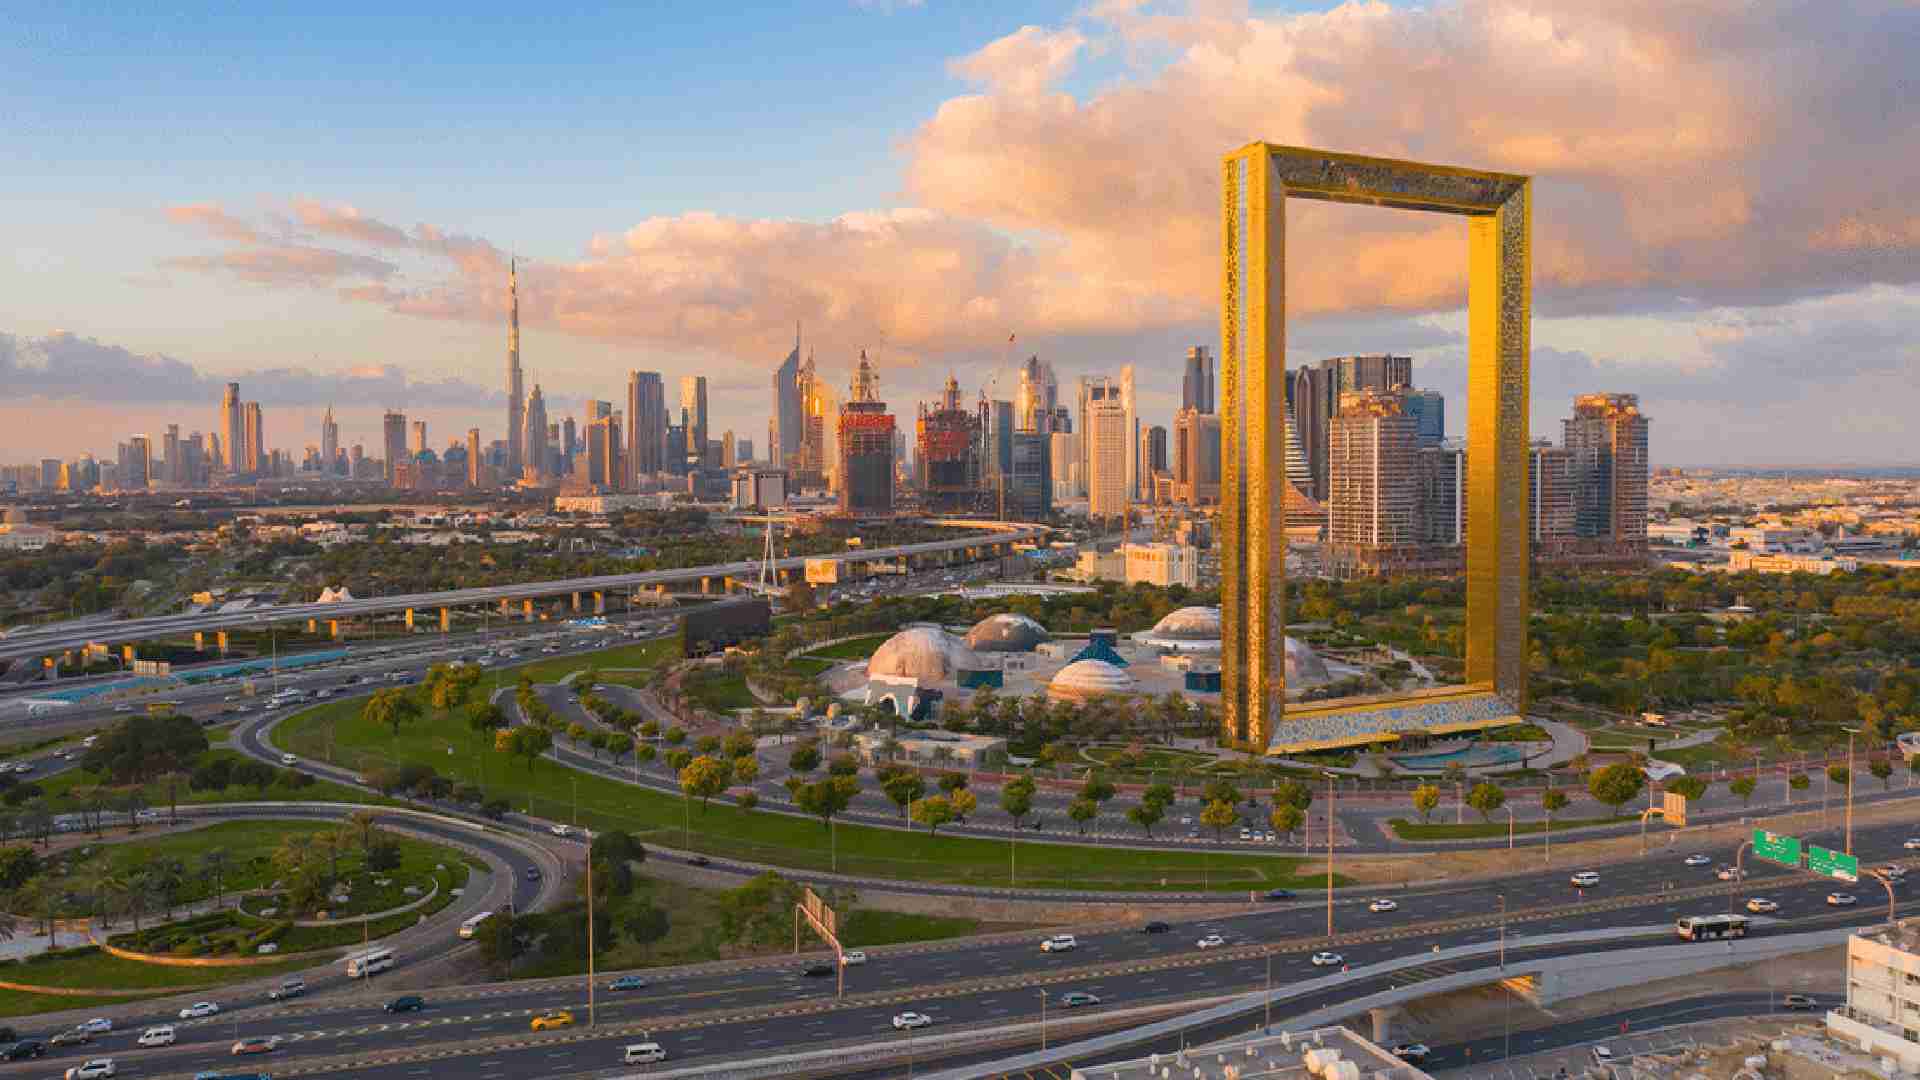 free zones in UAE